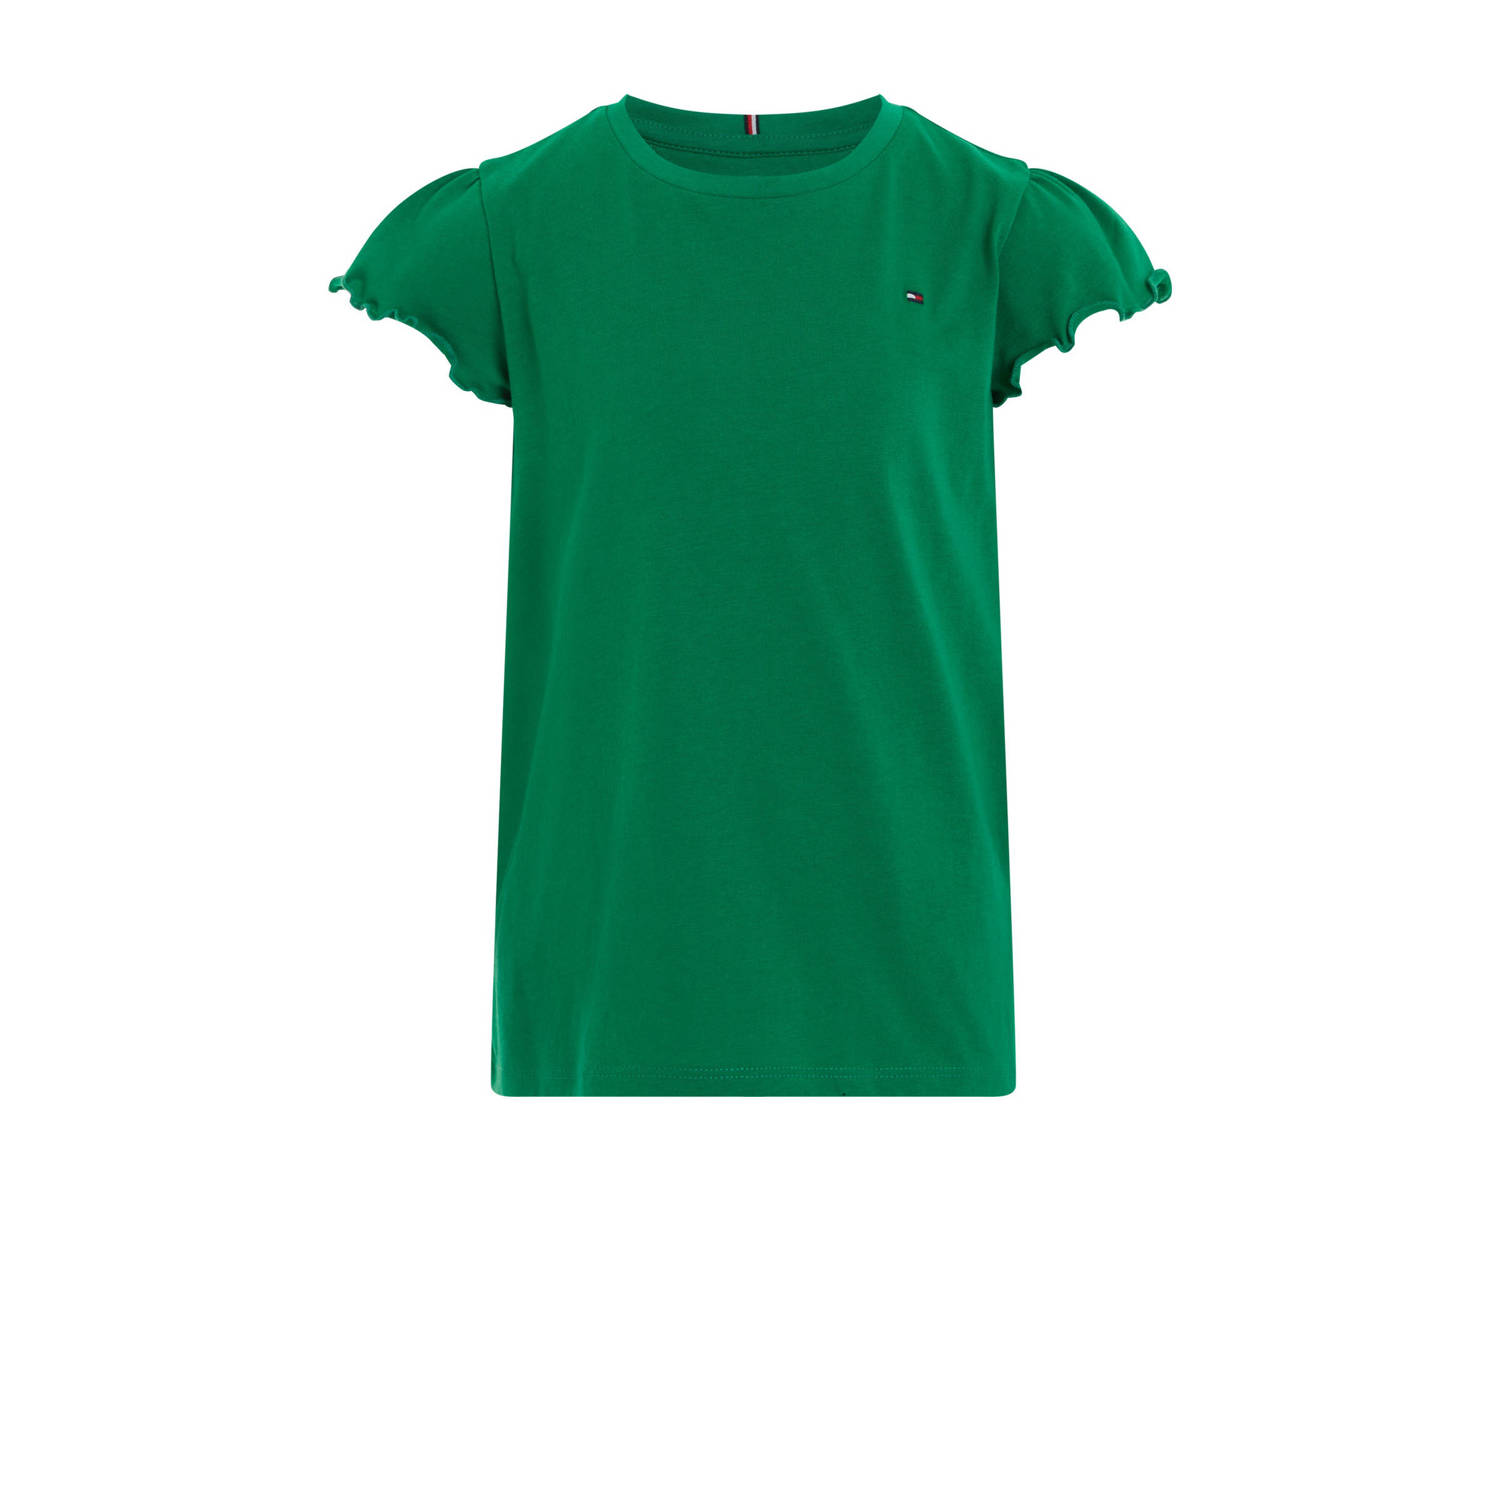 Tommy Hilfiger T-shirt groen Meisjes Katoen Ronde hals Effen 110